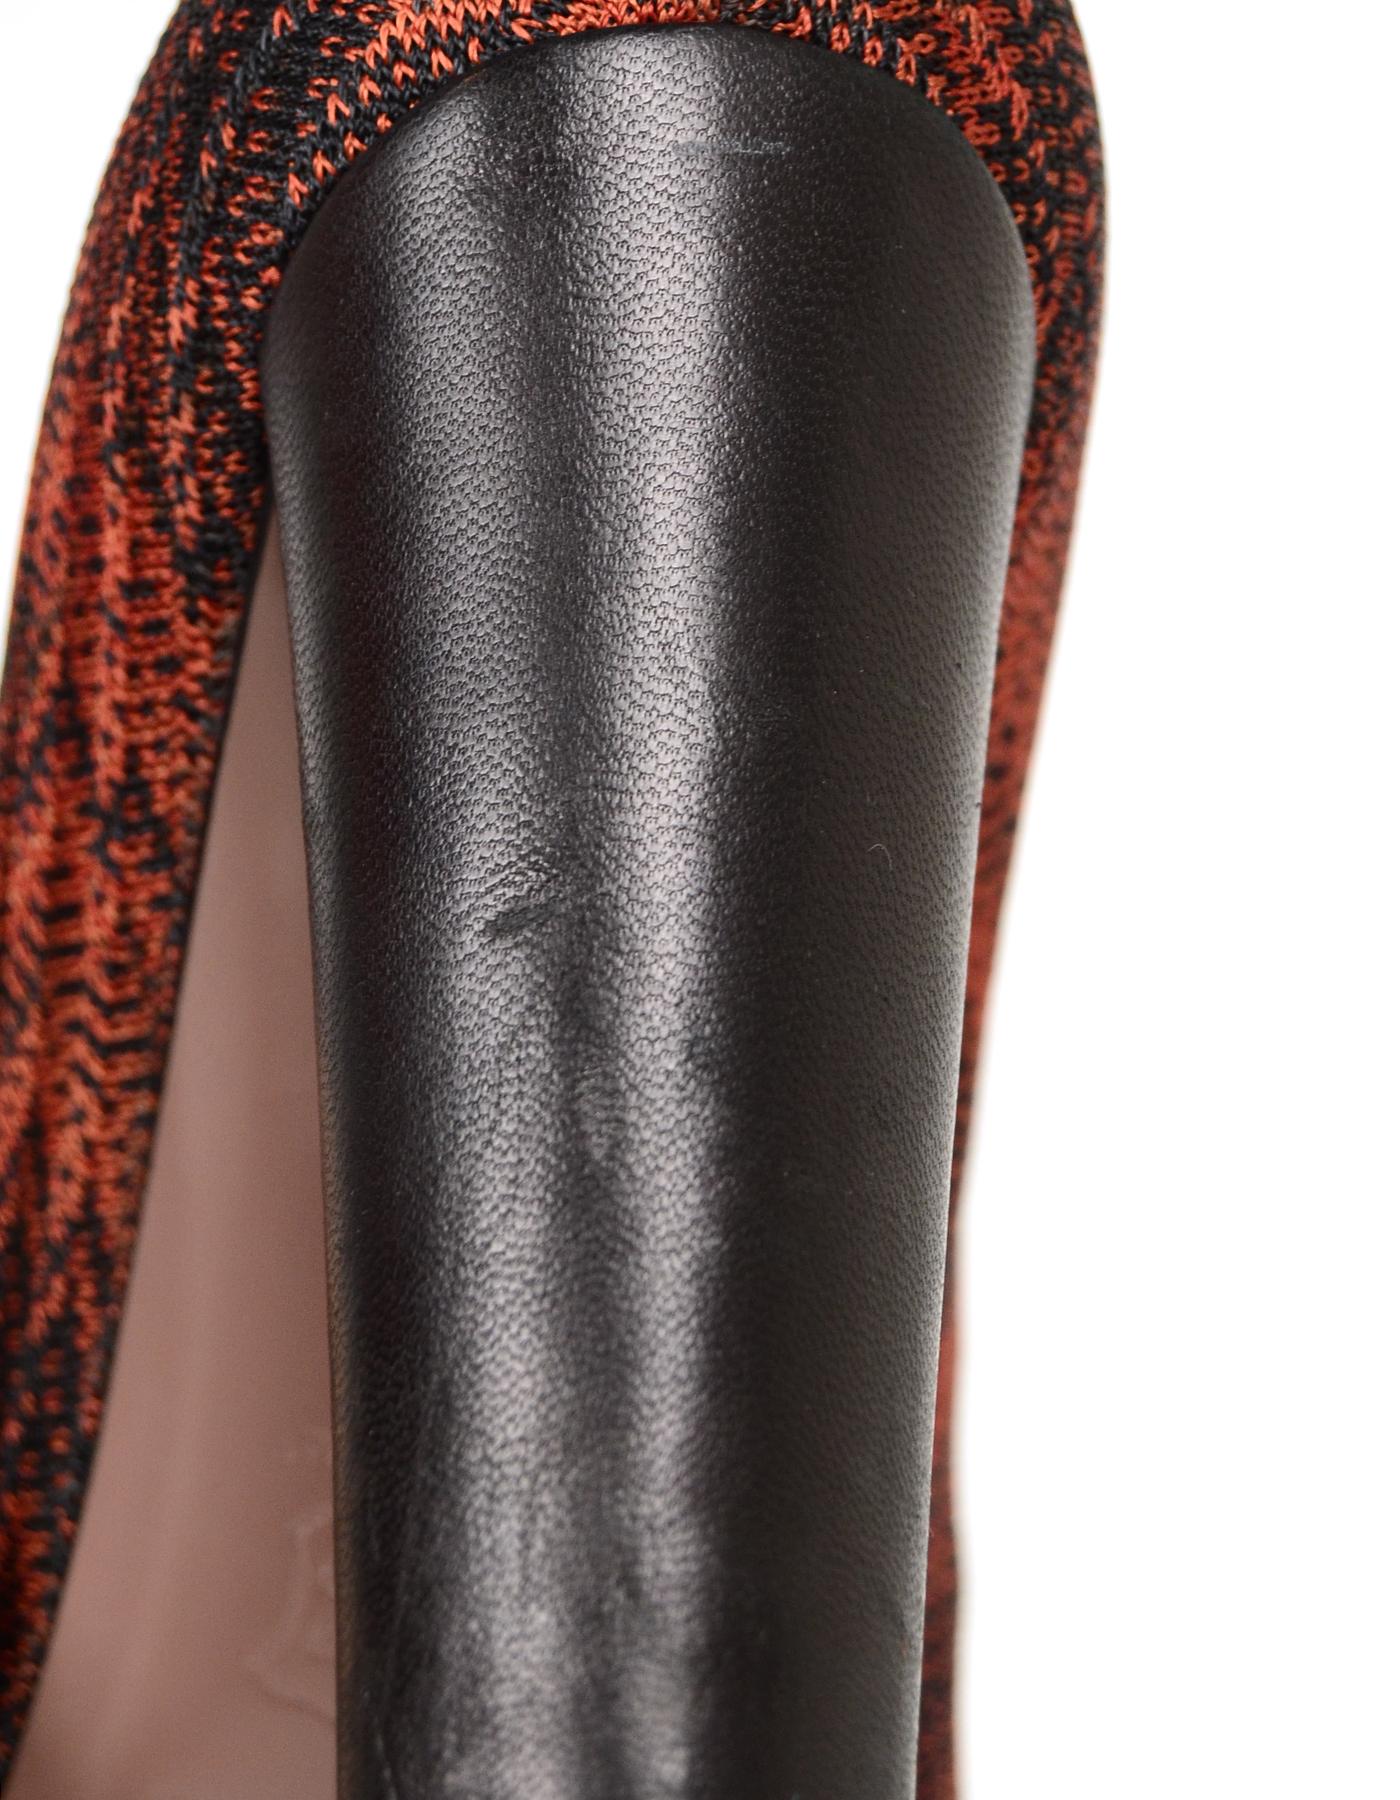 Missoni Orange/Black Knit/Leather Cap Toe Heels sz 39 4